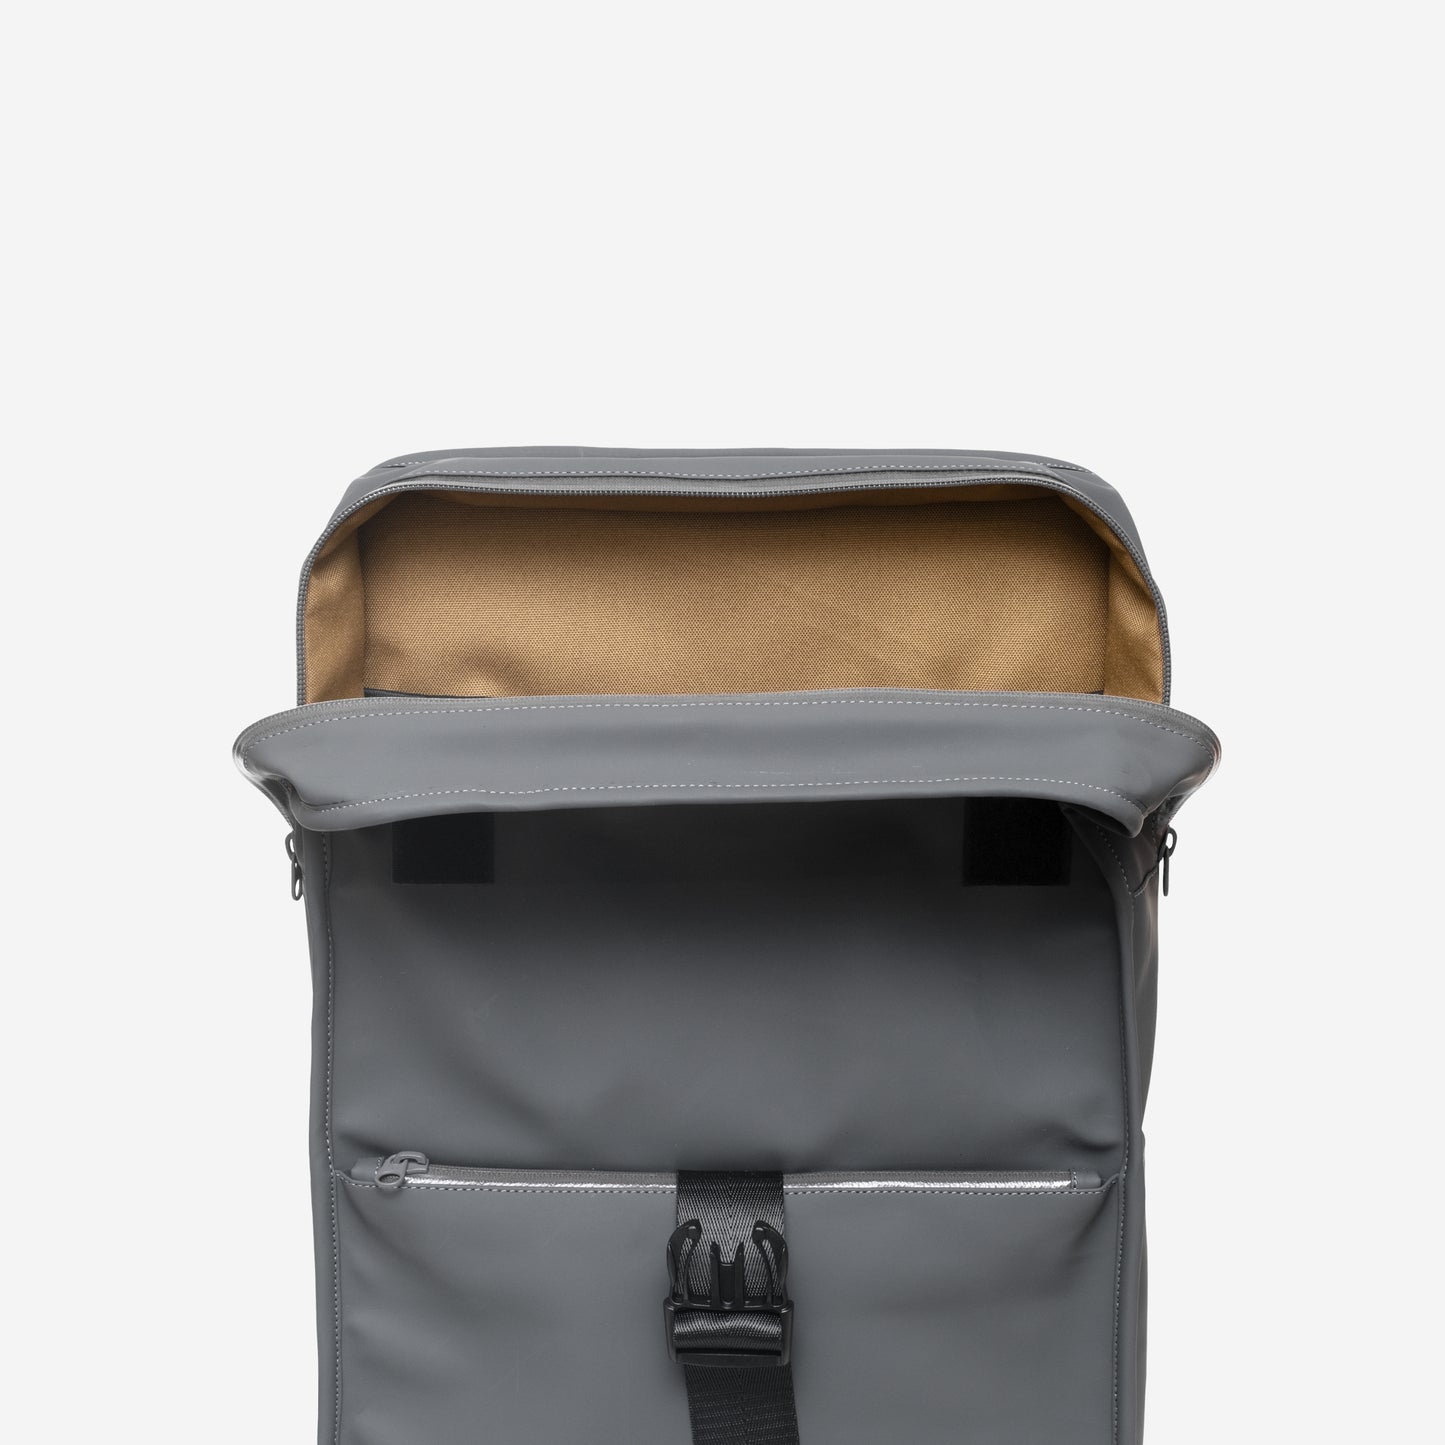 Rubbr® Bookpack Flap Type II